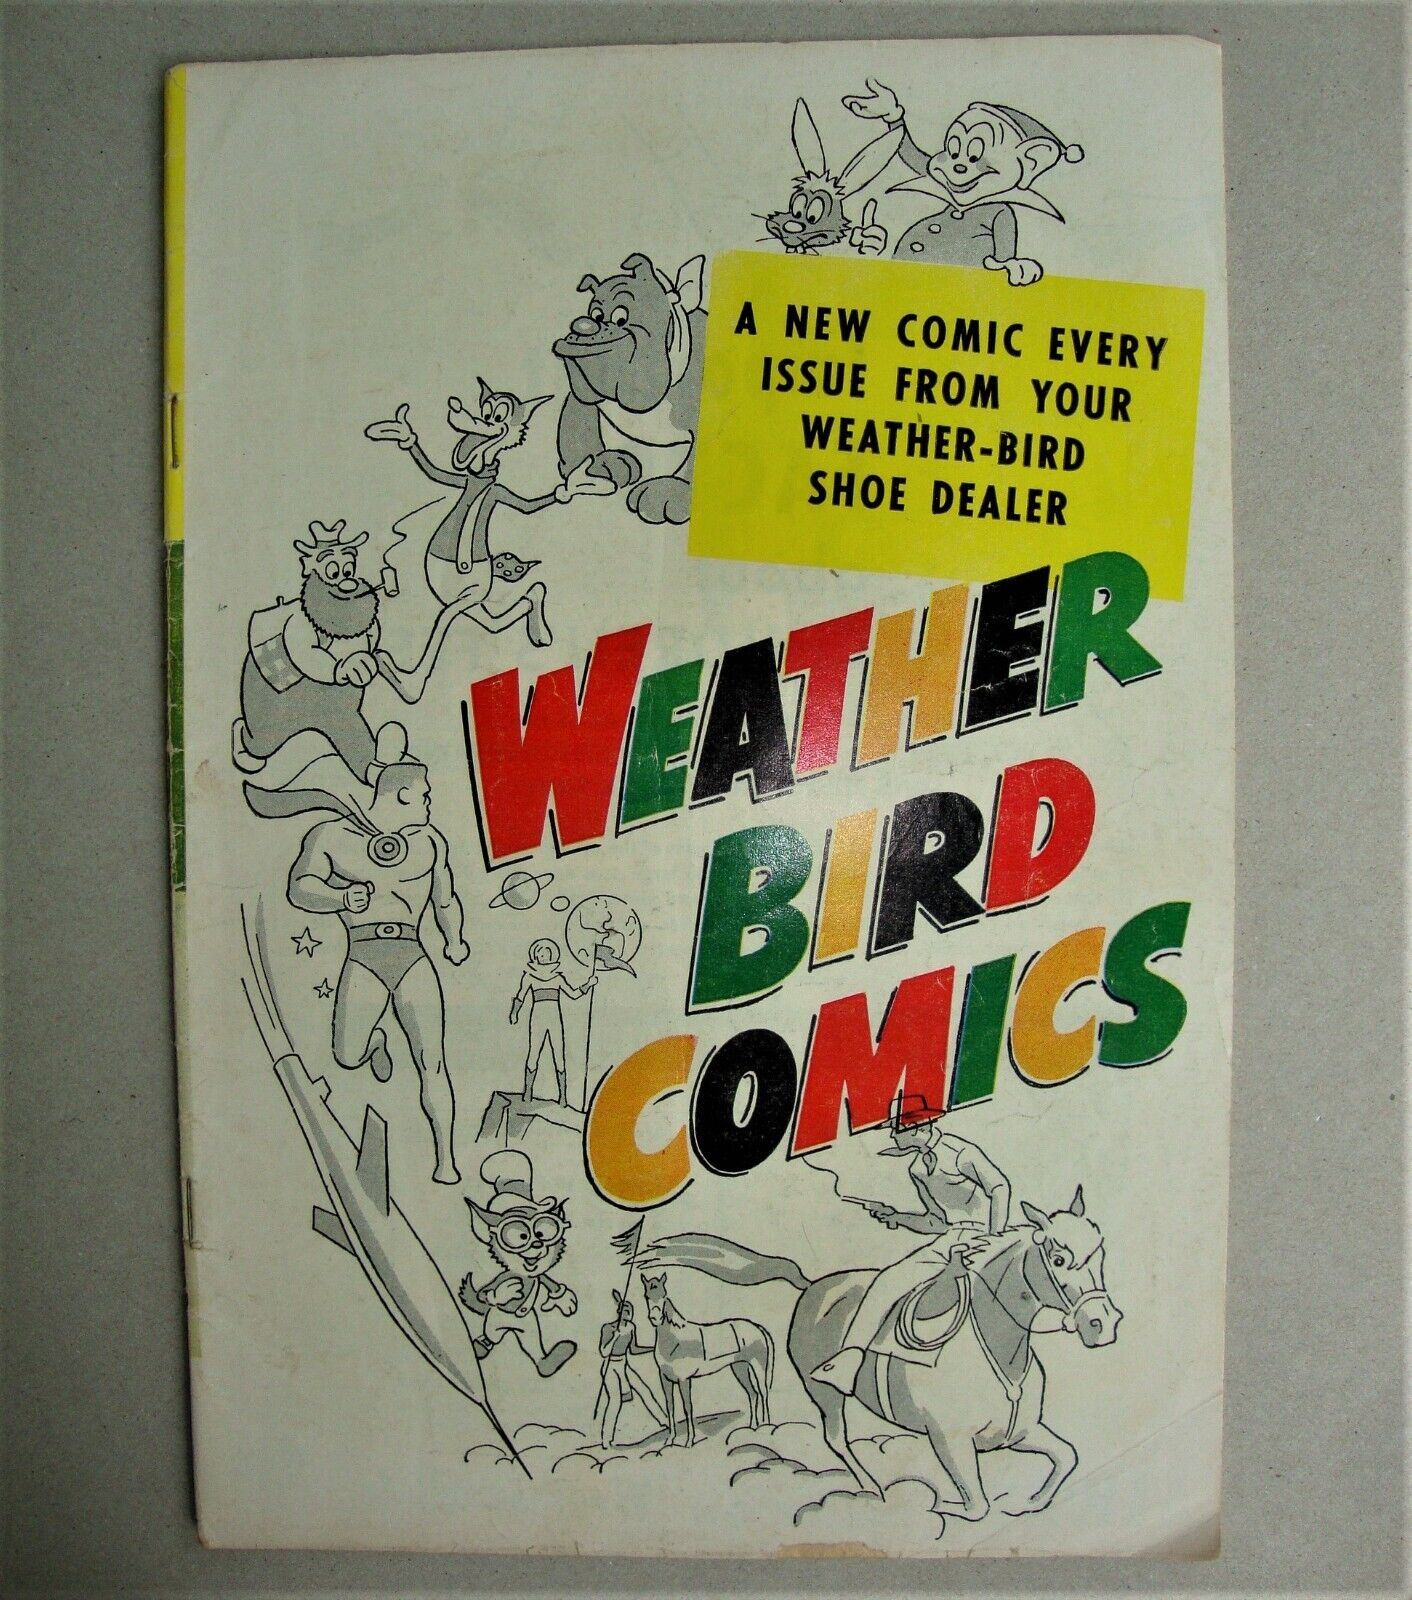 Weather-Bird GIveaway Comic Felix the Cat 1958 Kaylor\'s Shoe Store Evansville IN